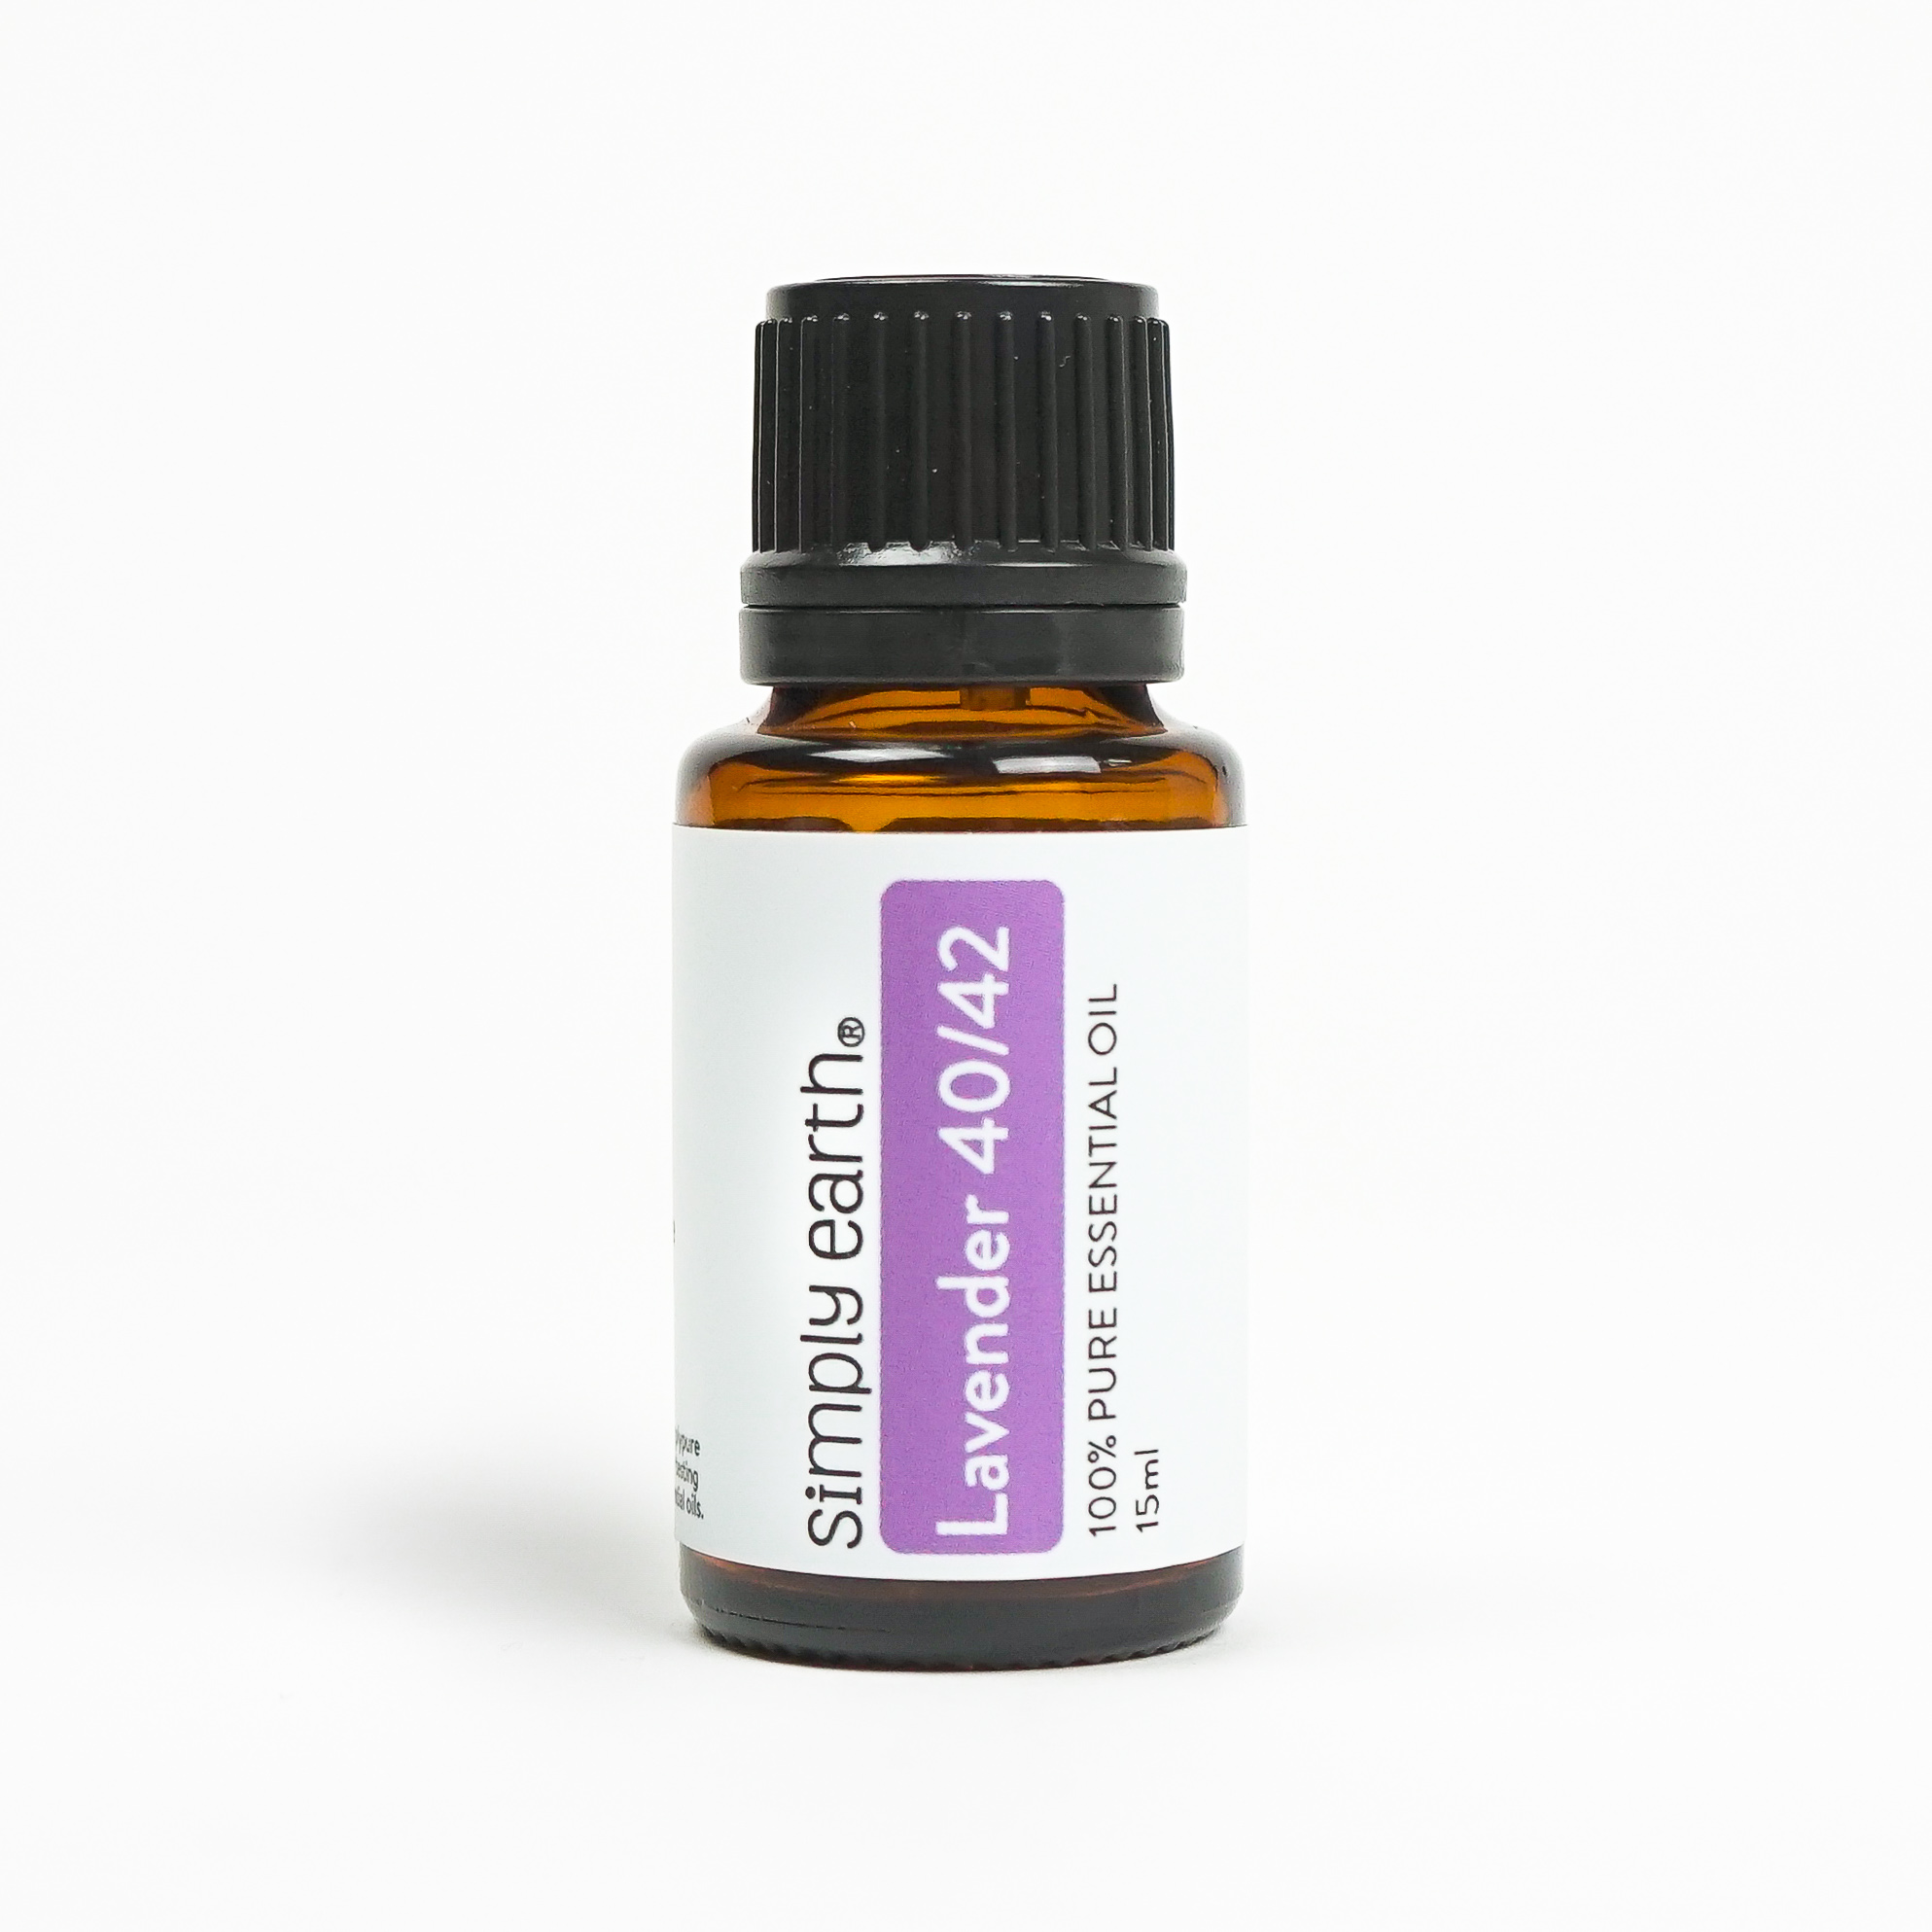 Lavender 40/42 Essential Oil Blend Size: 15ml